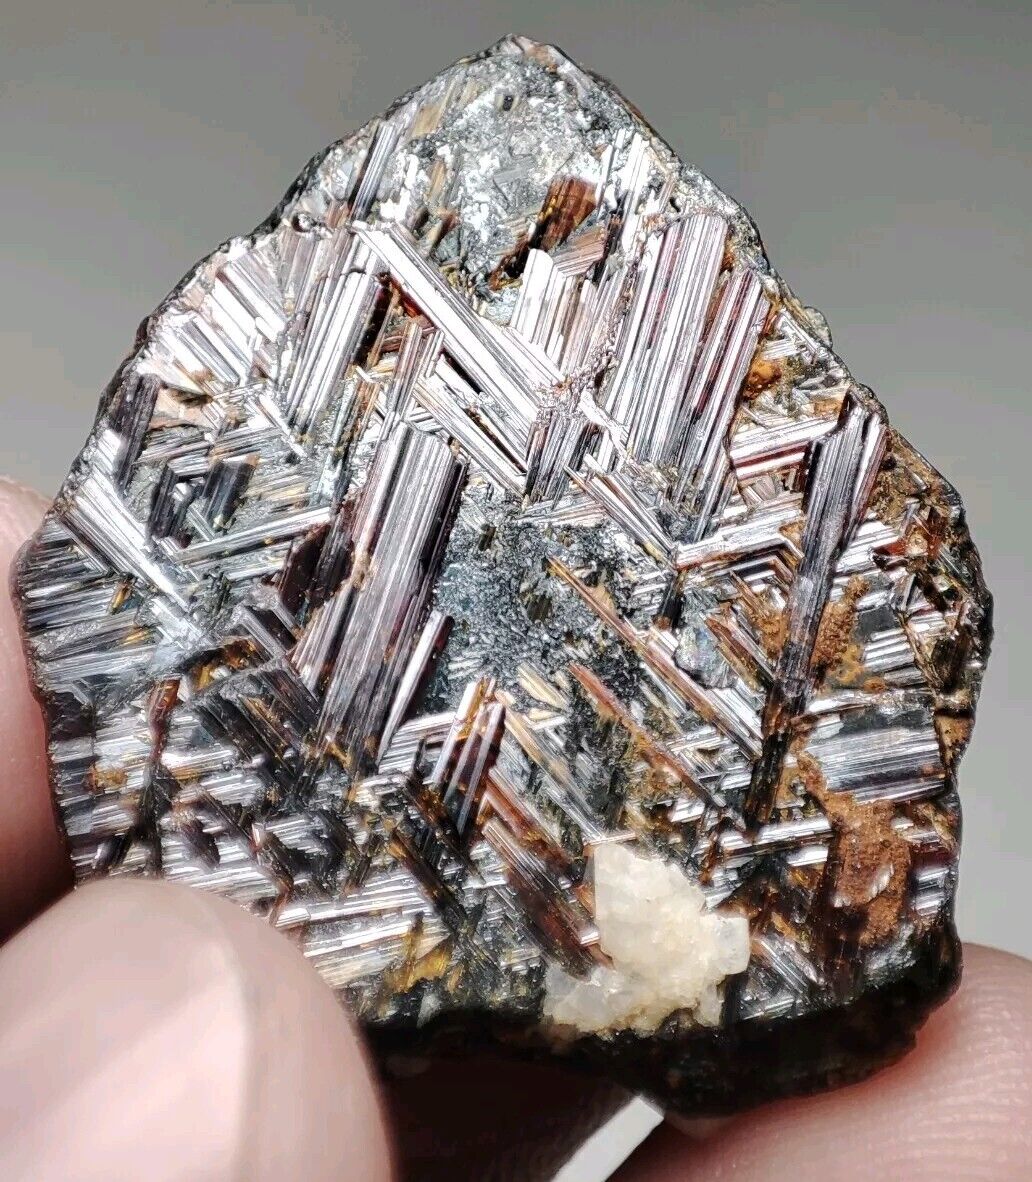 Sagenite Var Rutile Web On Hematite Having Unique Growth-Zagi Mountain,Pk.